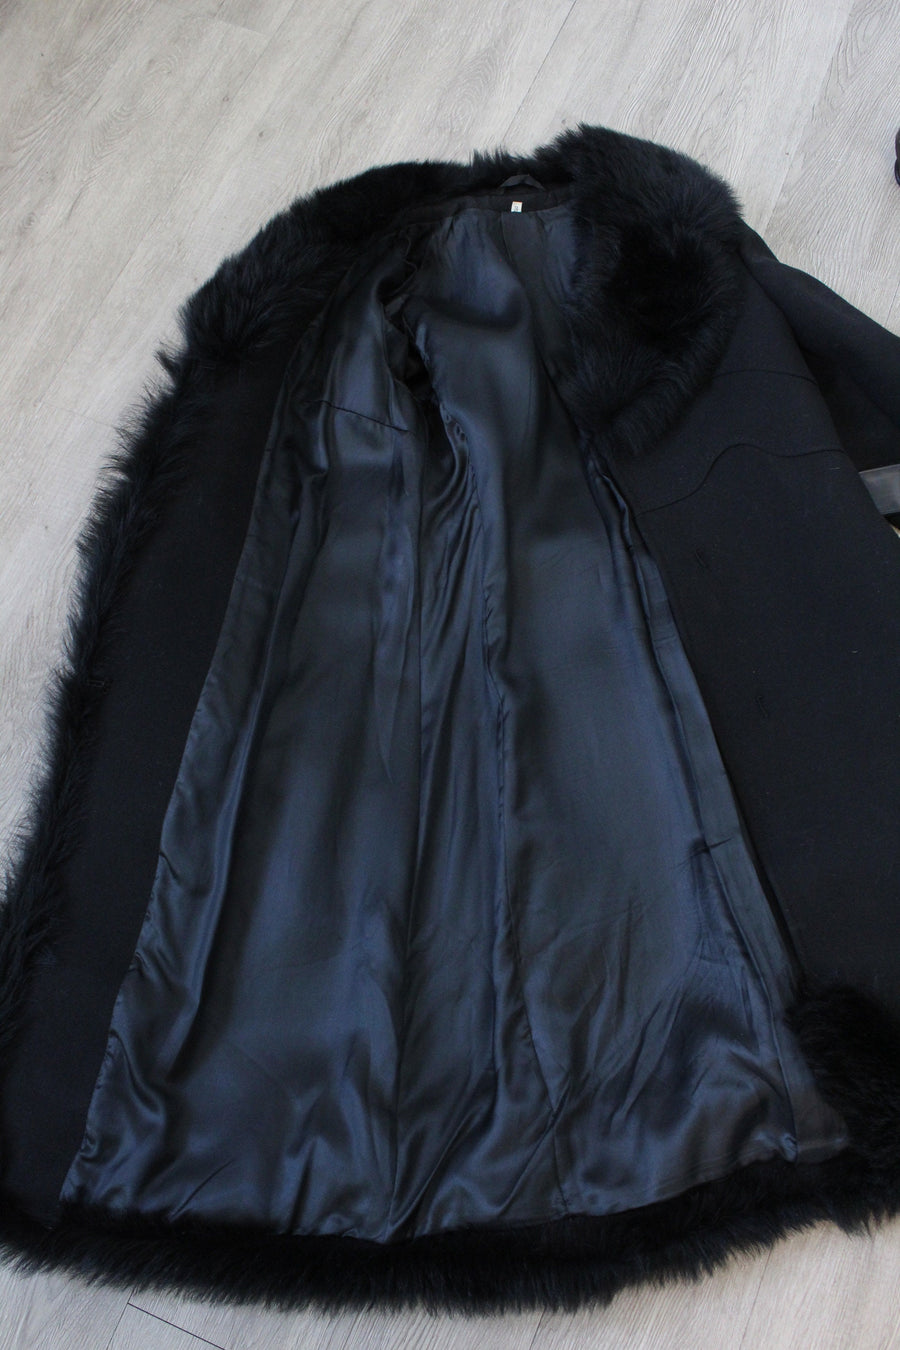 1960s black FAUX FUR belted coat medium | new winter